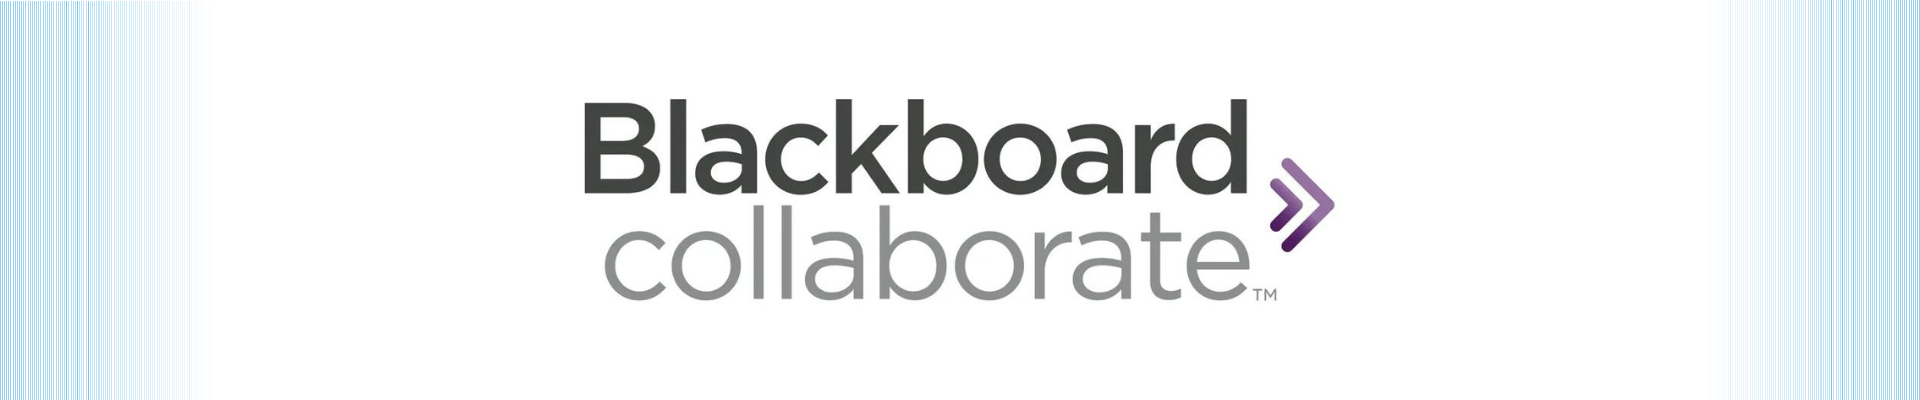 blackboard collaborate